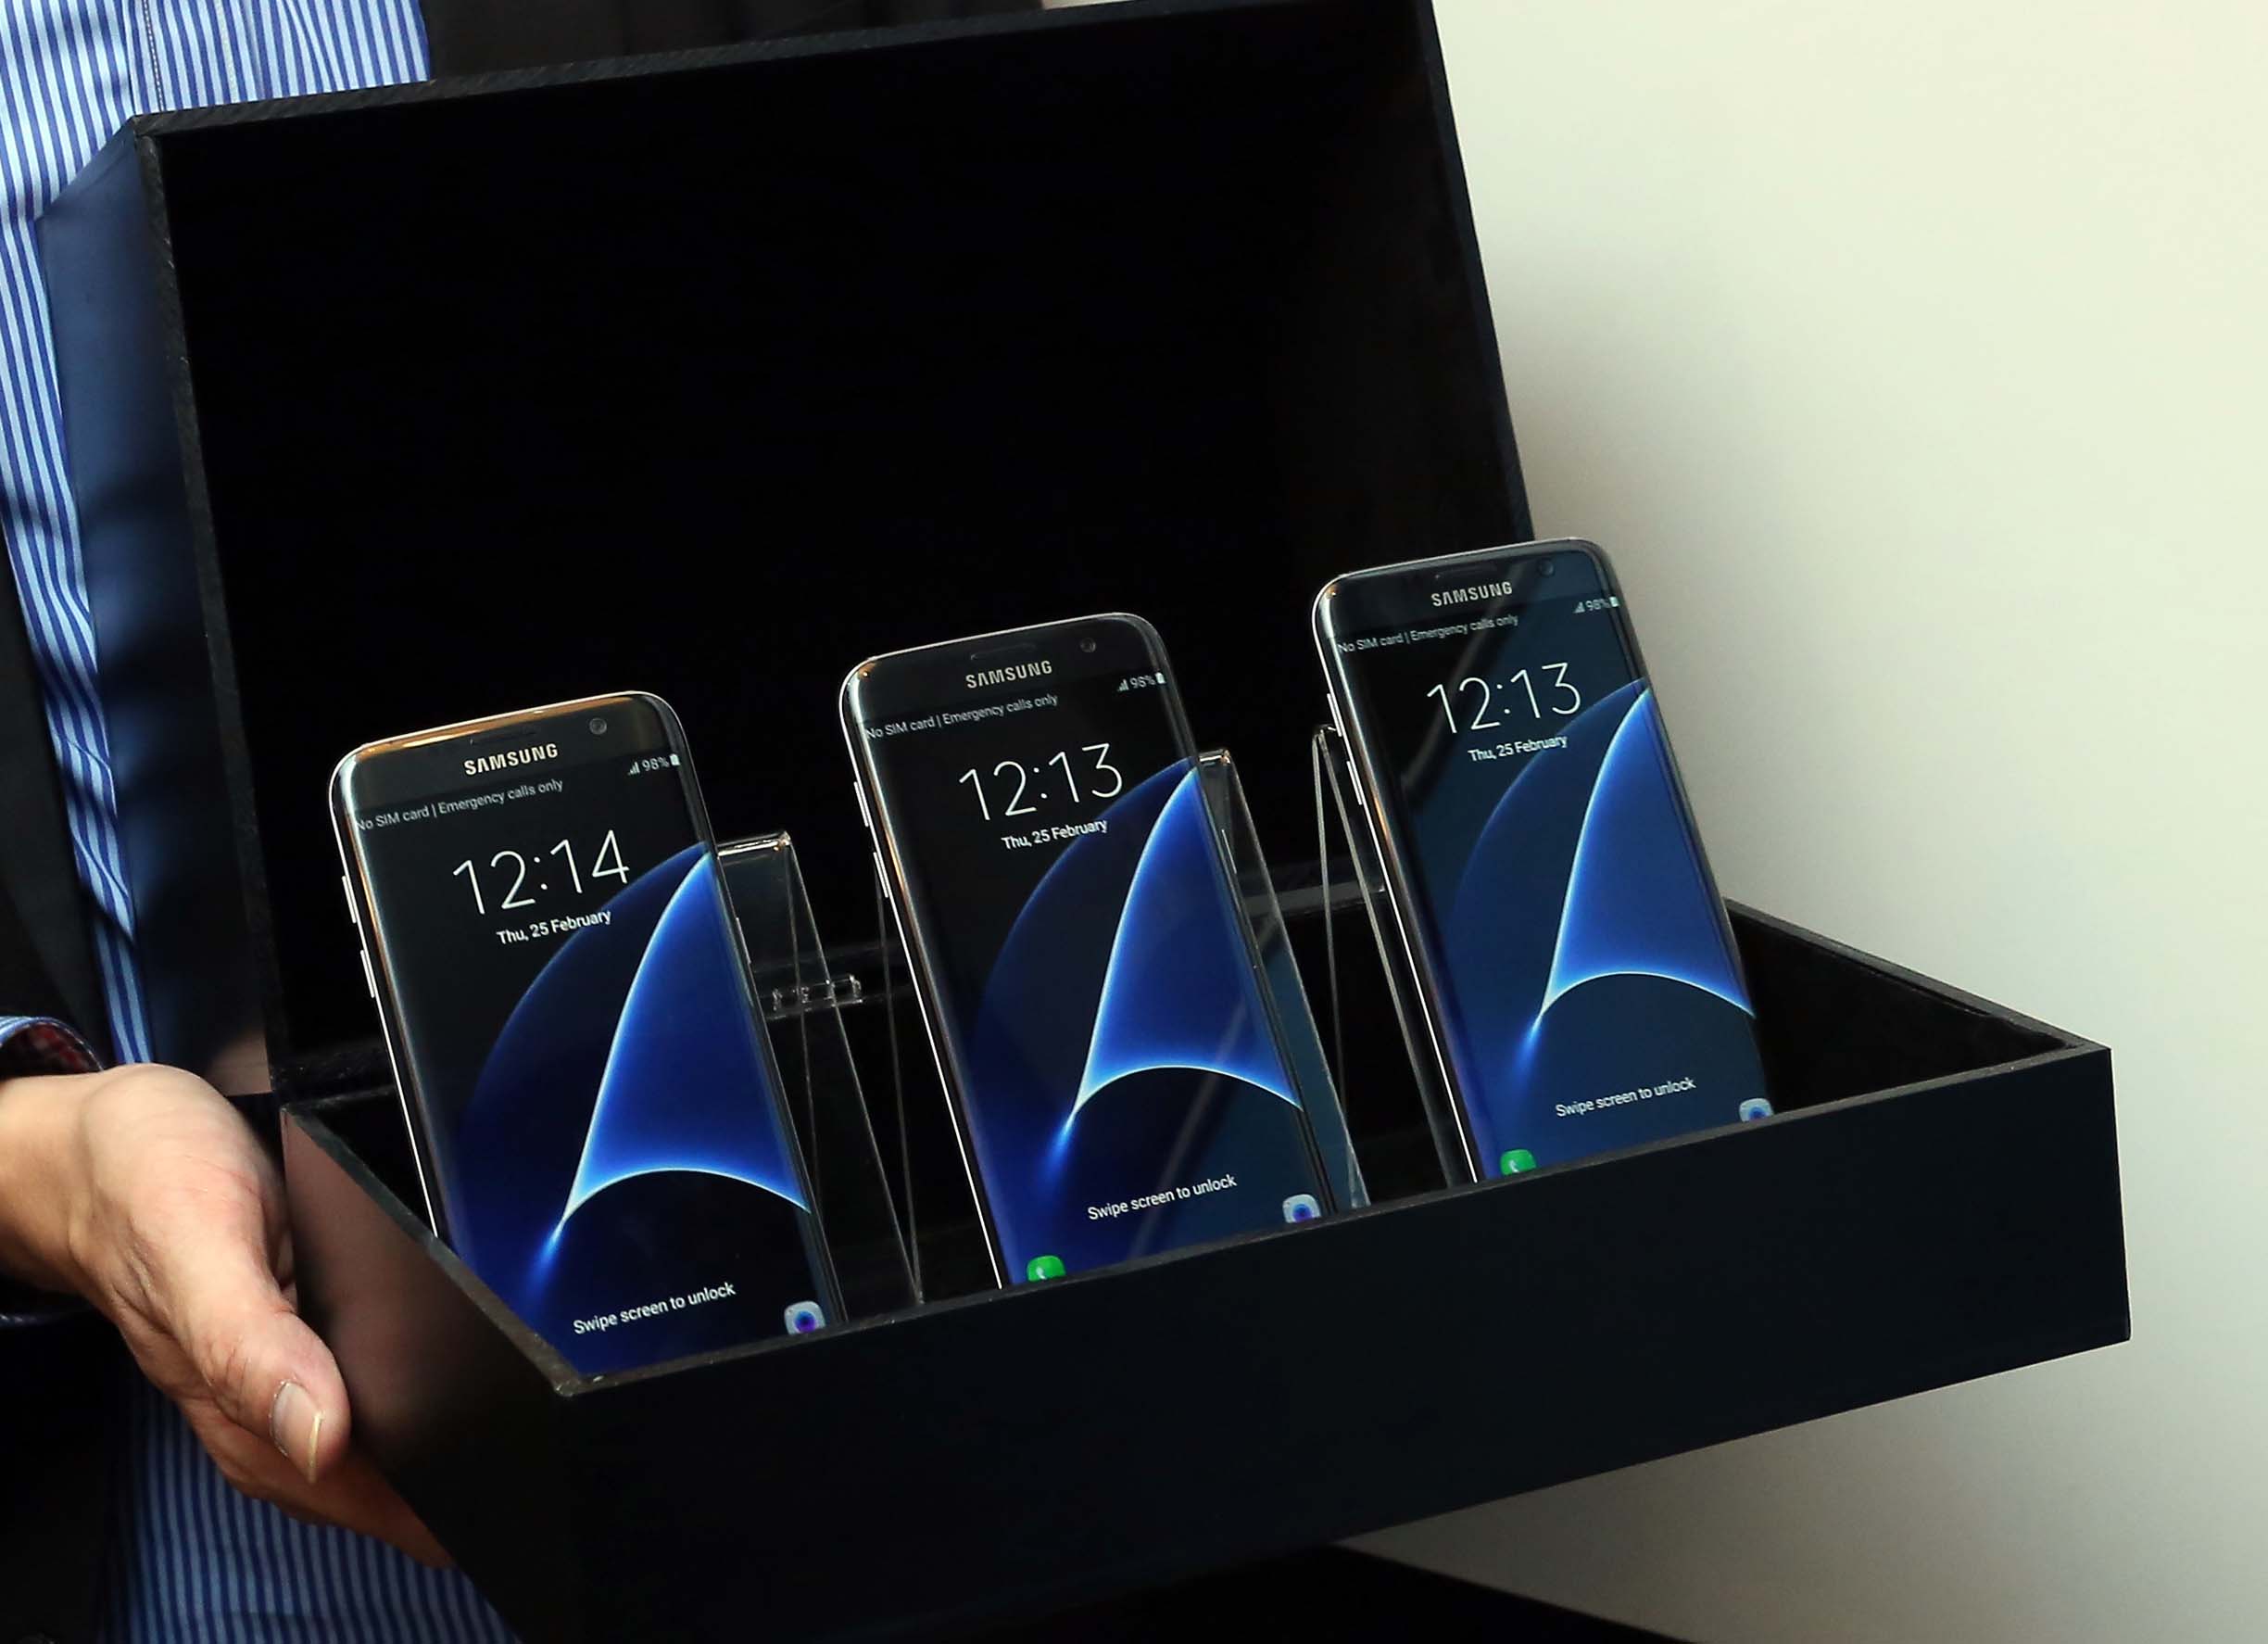 Samsung Galaxy S7 Edge Stunning Images HD 1080p 2448x1774